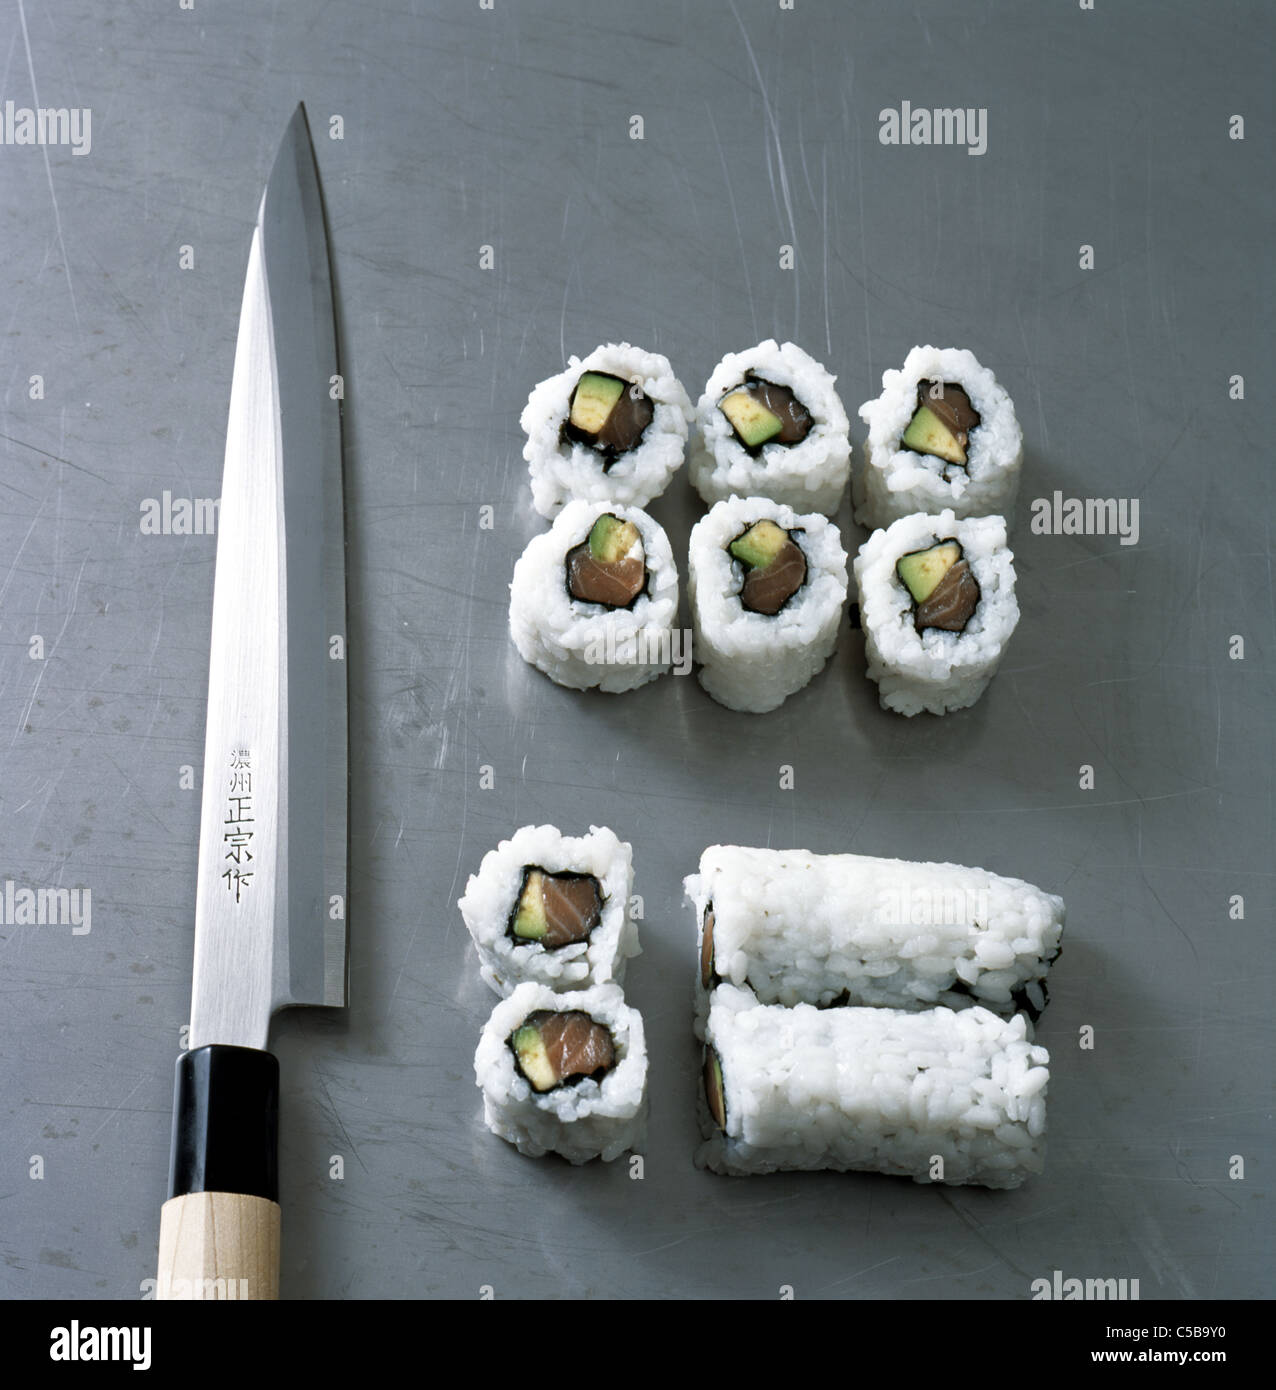 Uramaki Sushi: Cutting the role into slices Stock Photo - Alamy